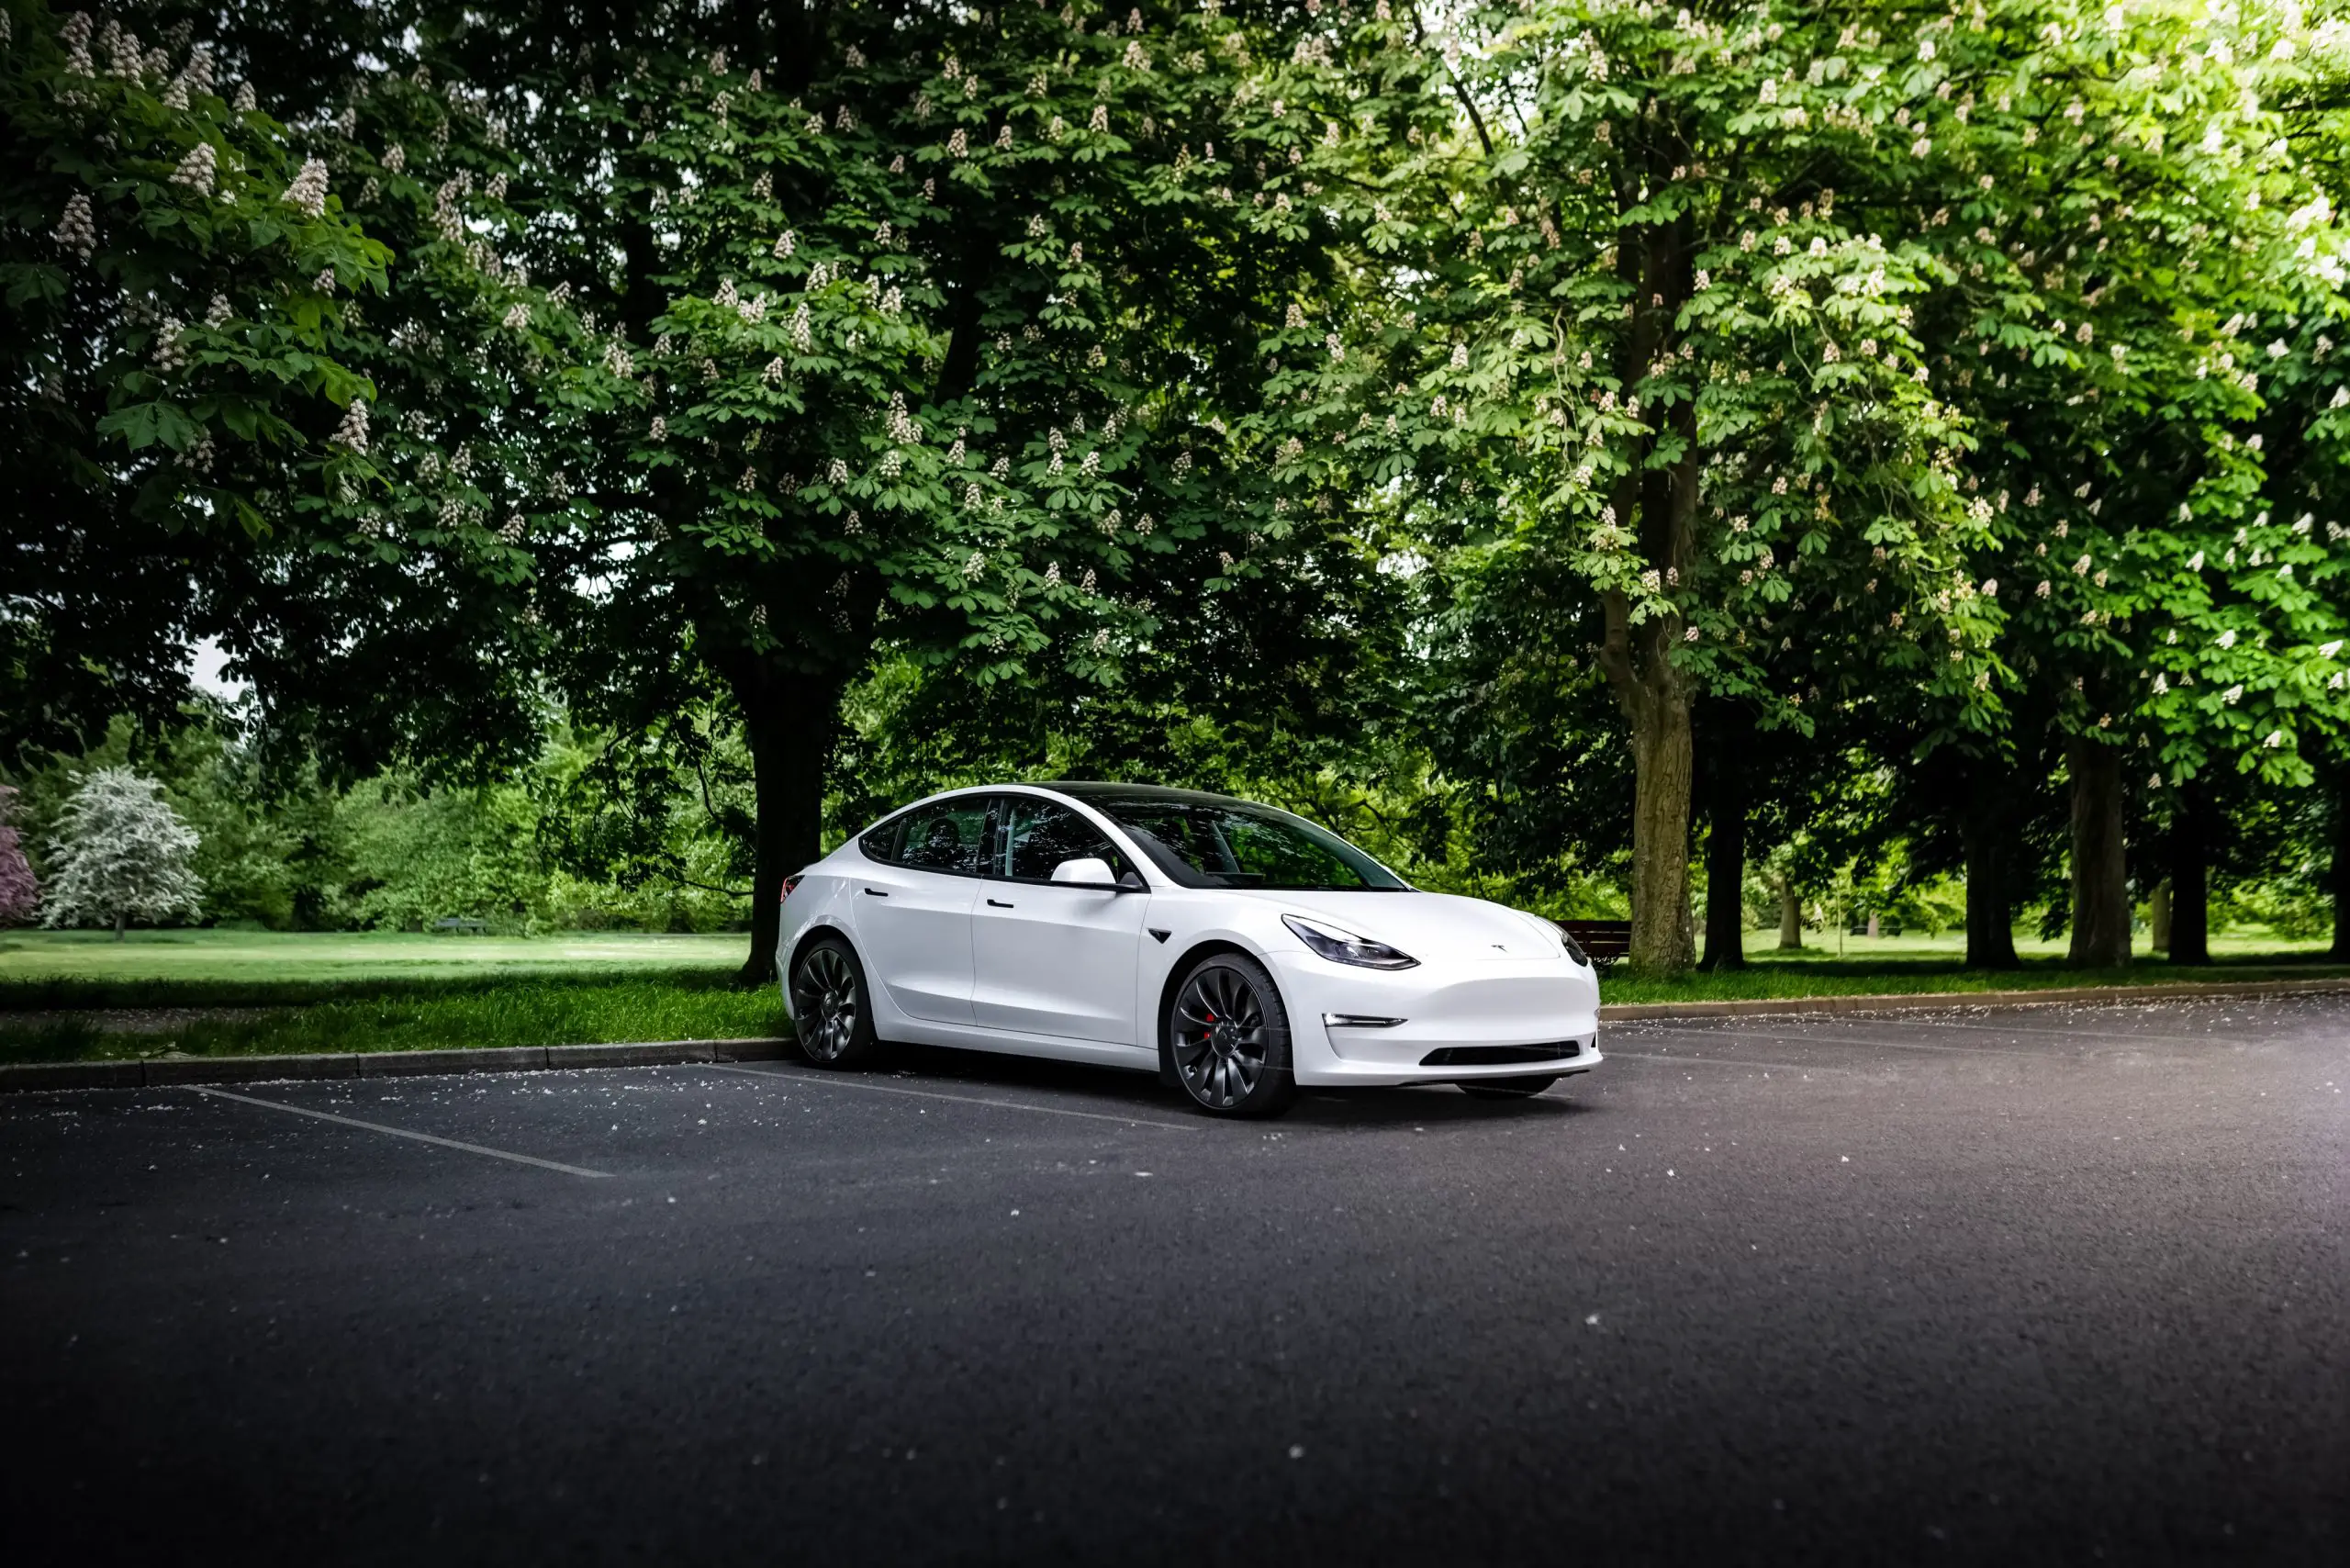 Tesla sued for false advertising after allegedly exaggerating EV ranges